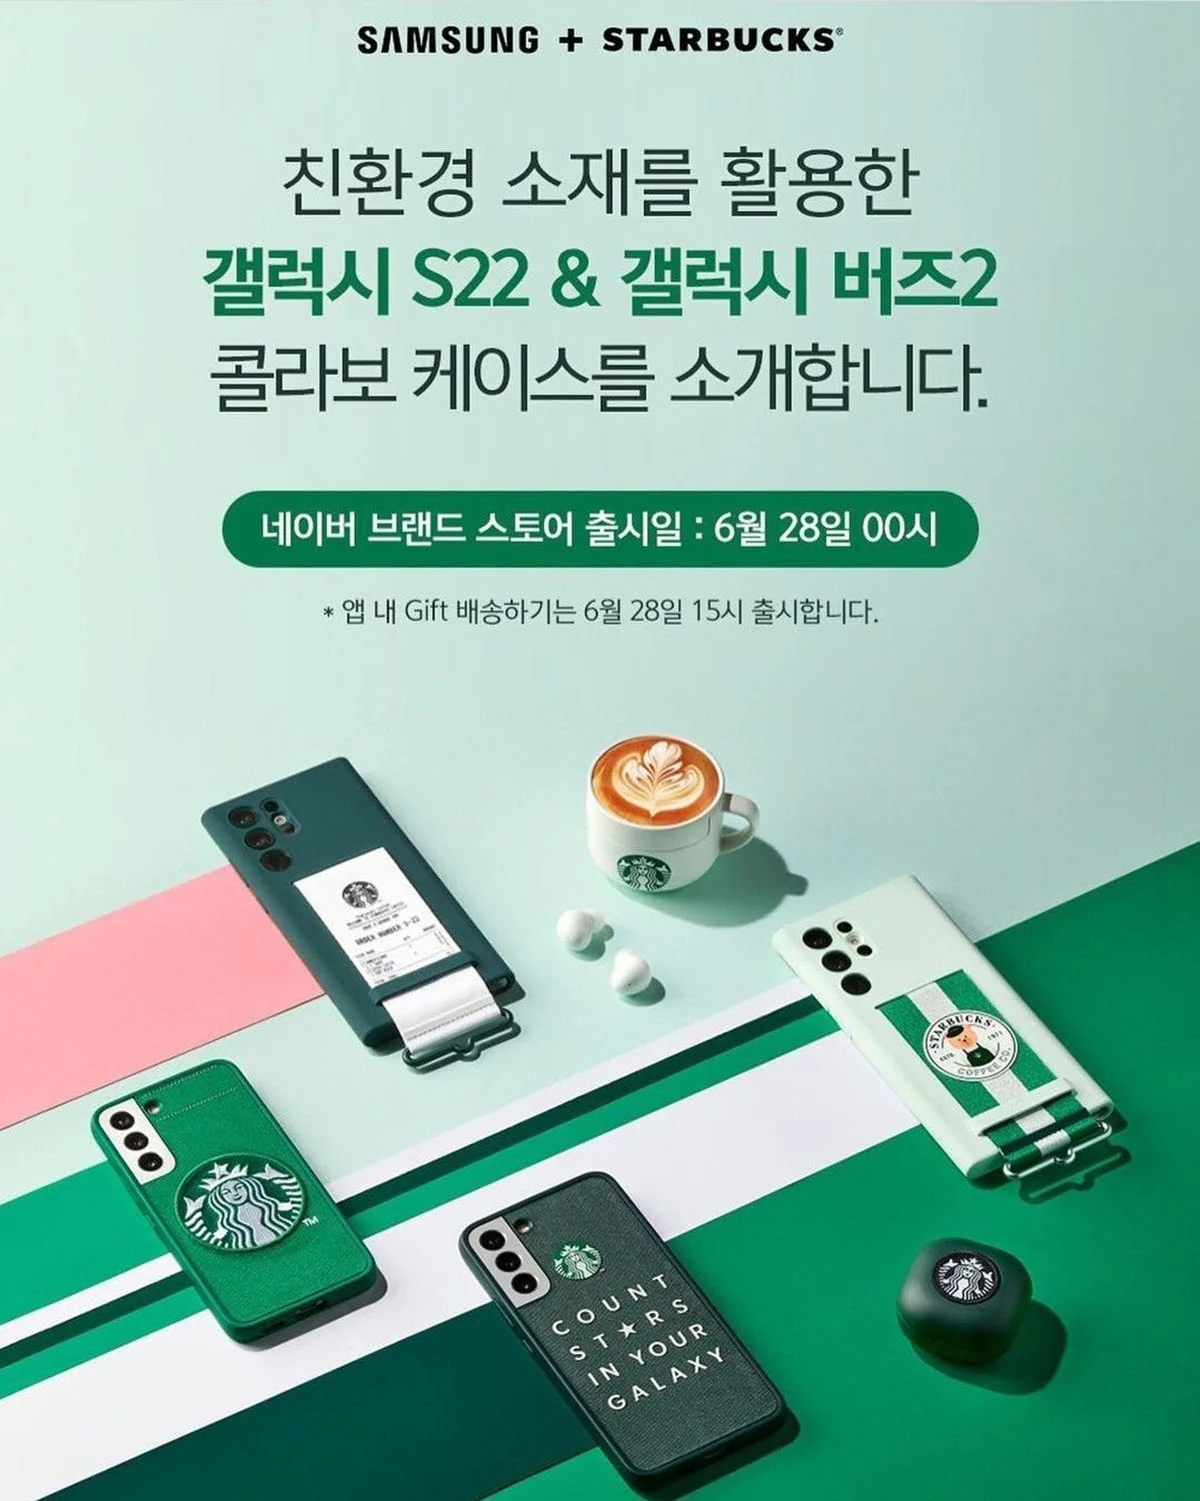 Samsung Galaxy x Starbucks limited edition accessories 4